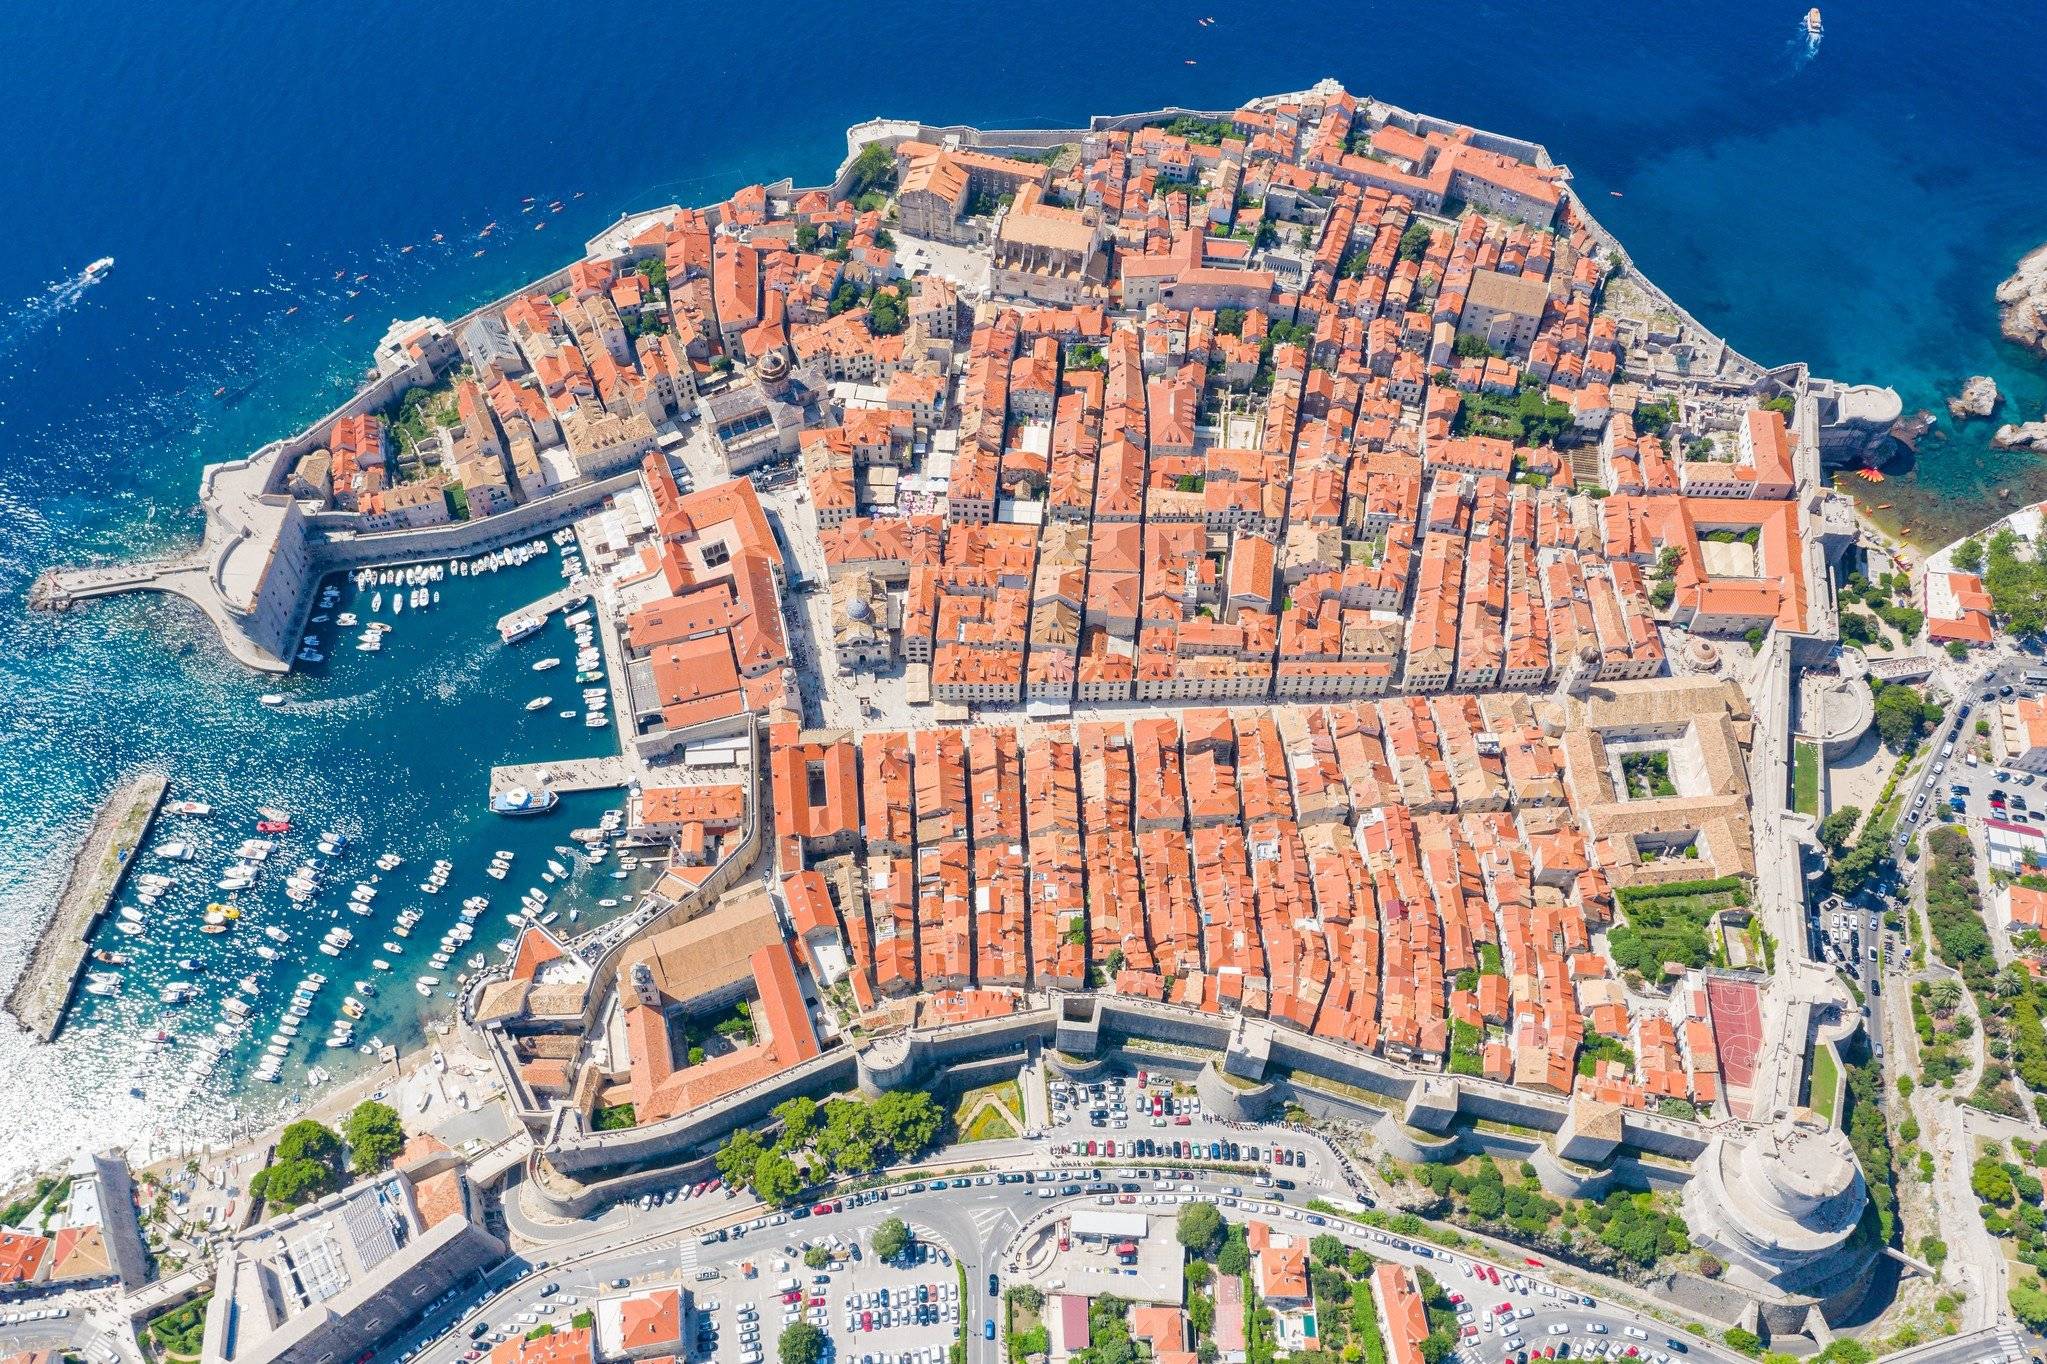 ¡Hasta la vista Dubrovnik, doviđenja países ex-yugoslavos!